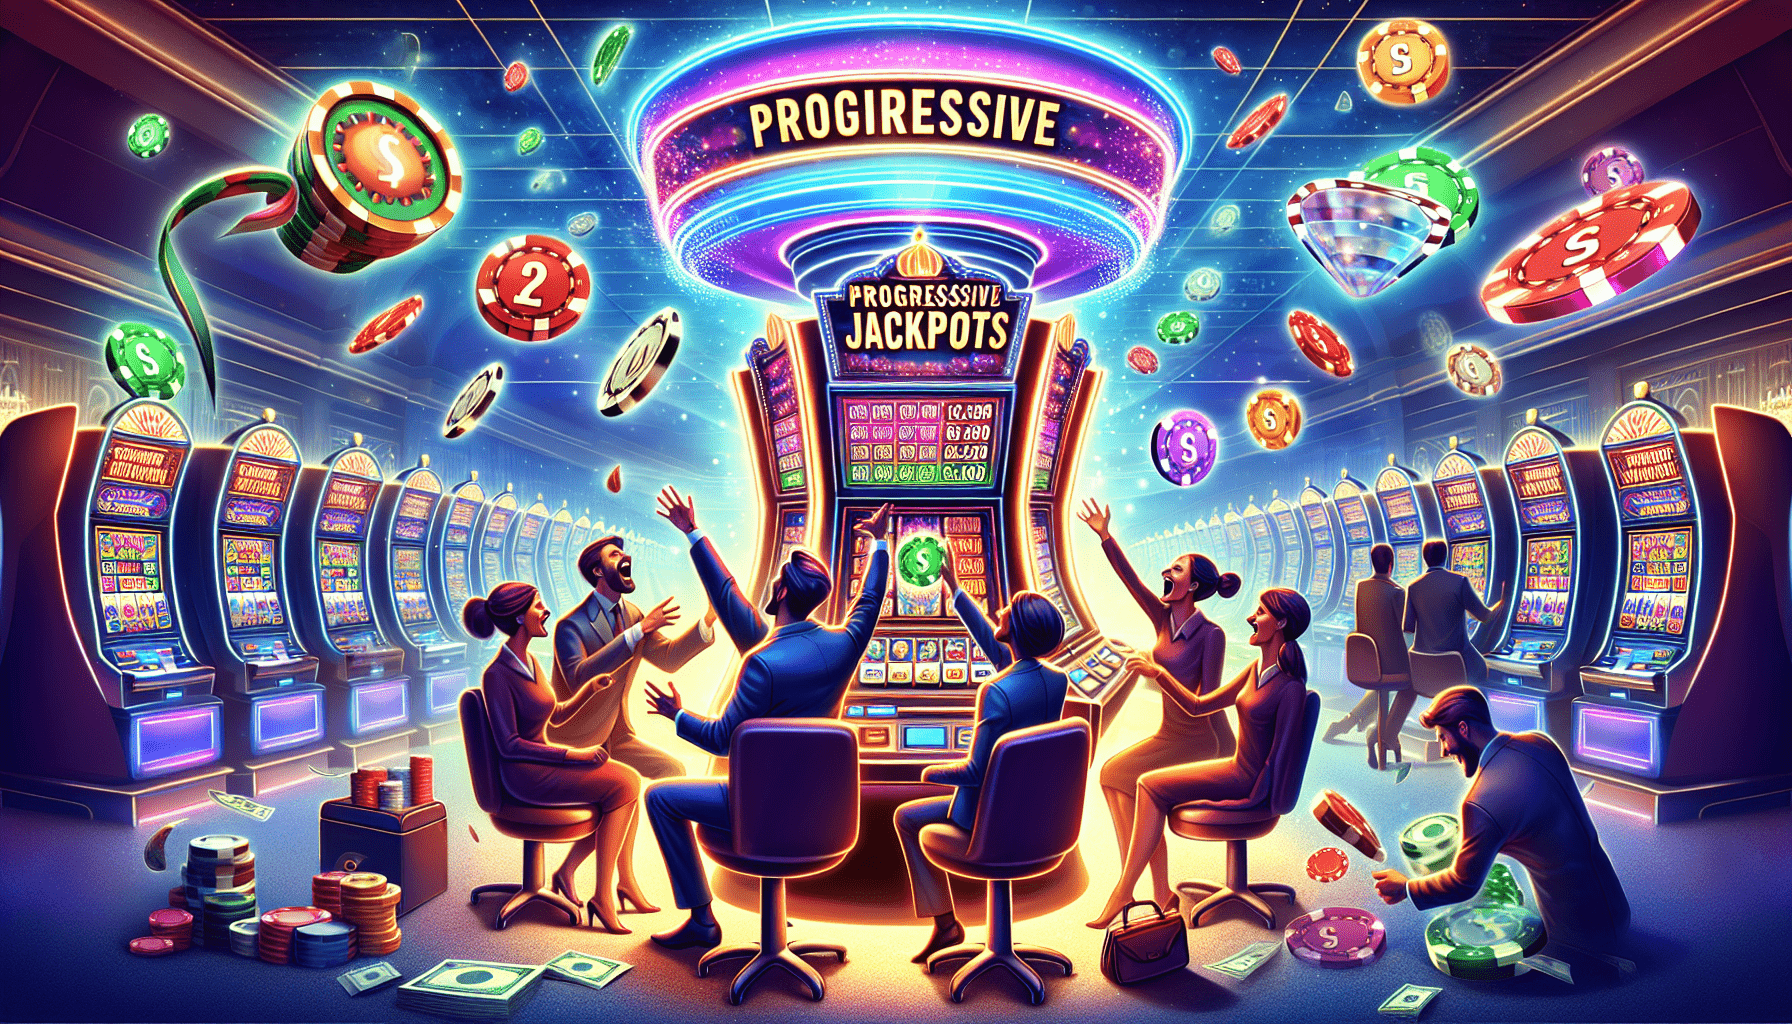 What Are Progressive Jackpots?